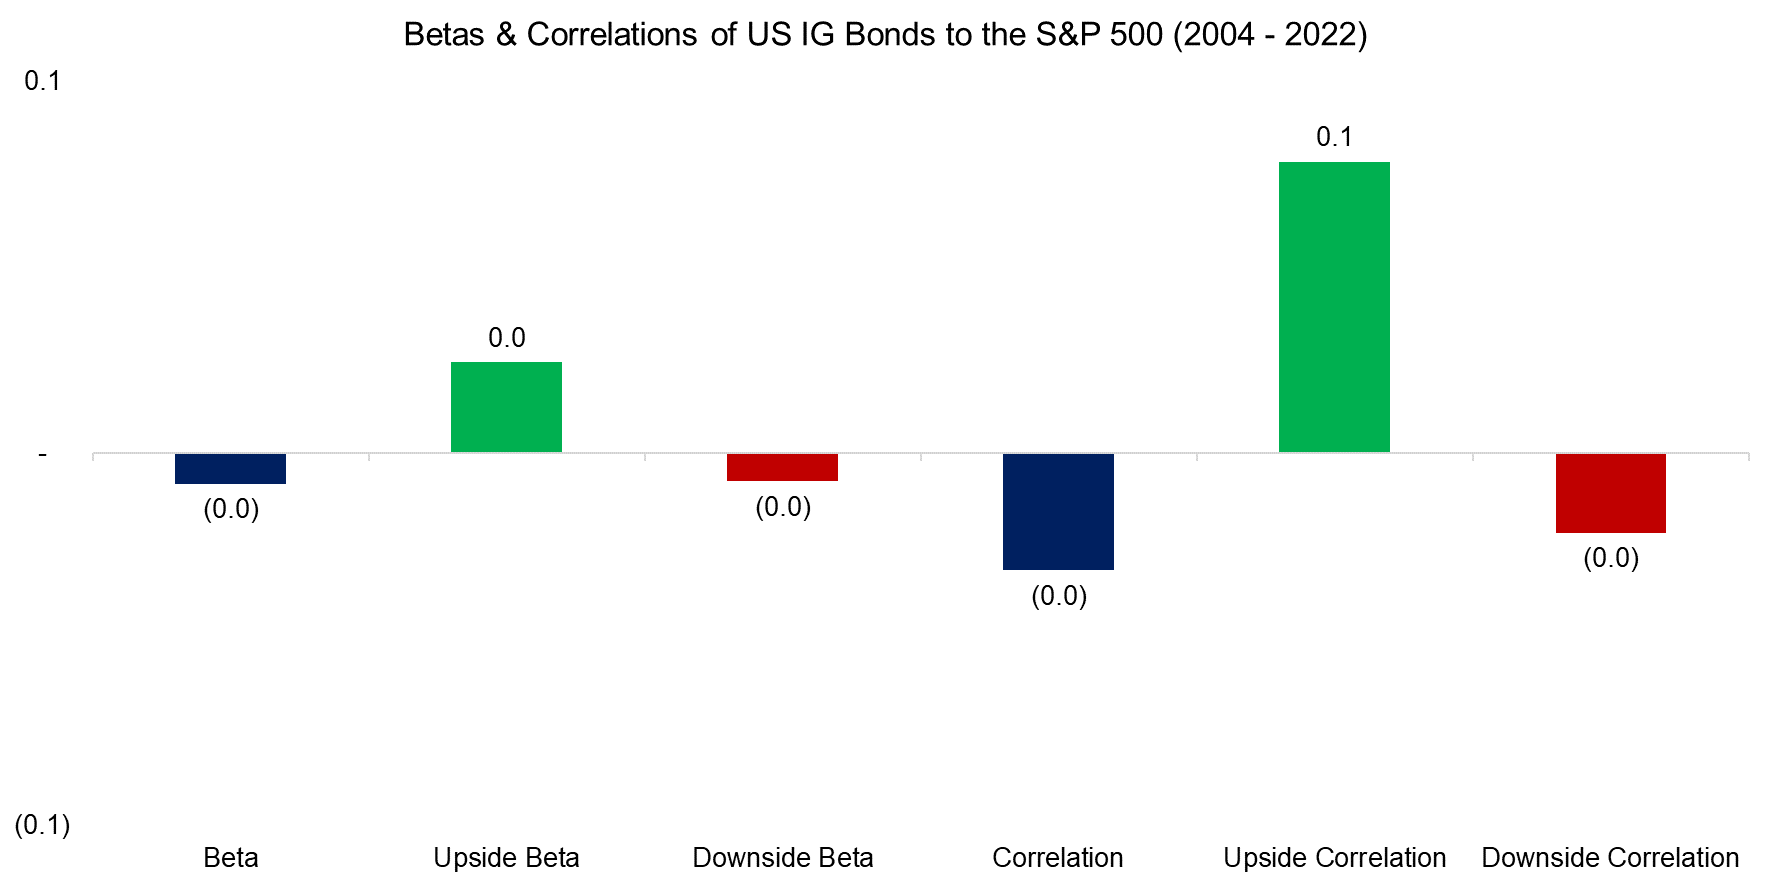 Betas & Correlations of US IG Bonds to the S&P 500 (2004 - 2022)